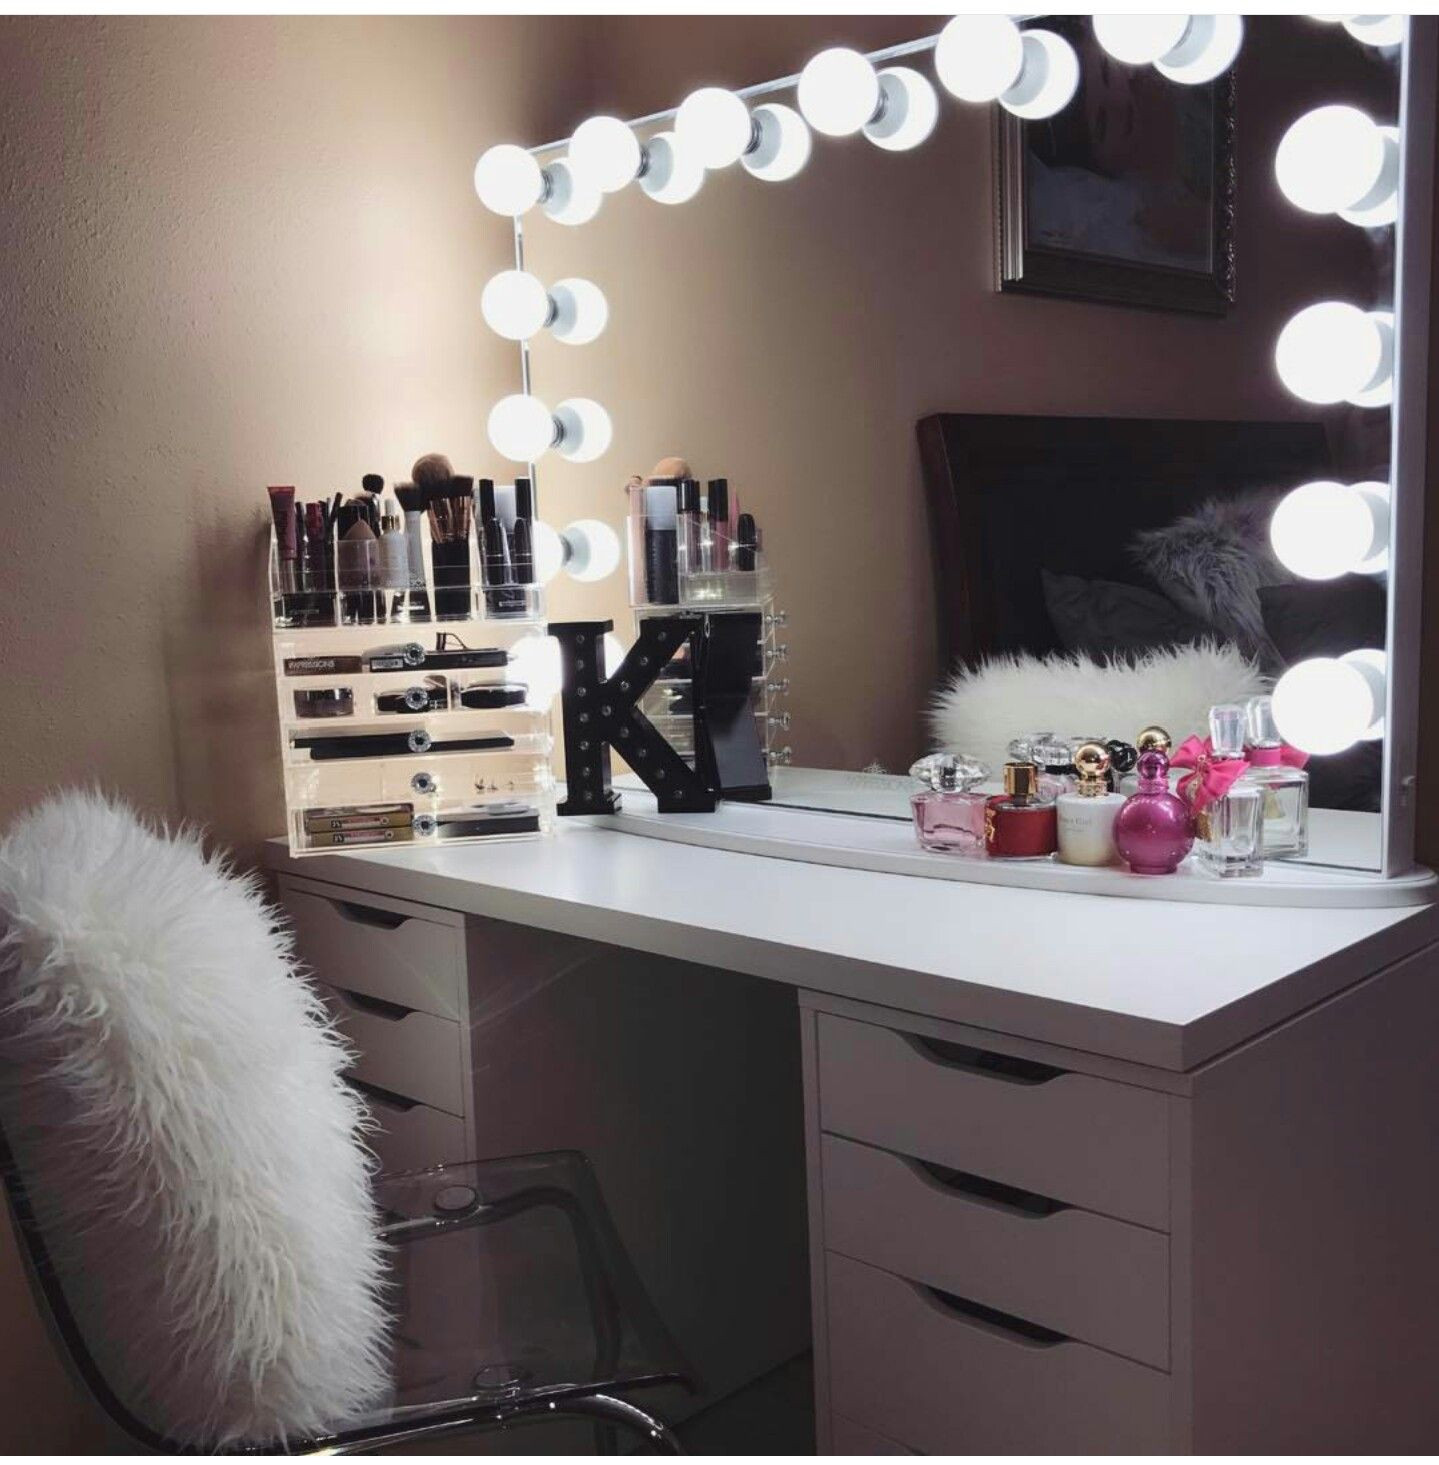 Girls Bedroom Vanities
 Pin by Avery A Vanden Bos on Vanity’s in 2019